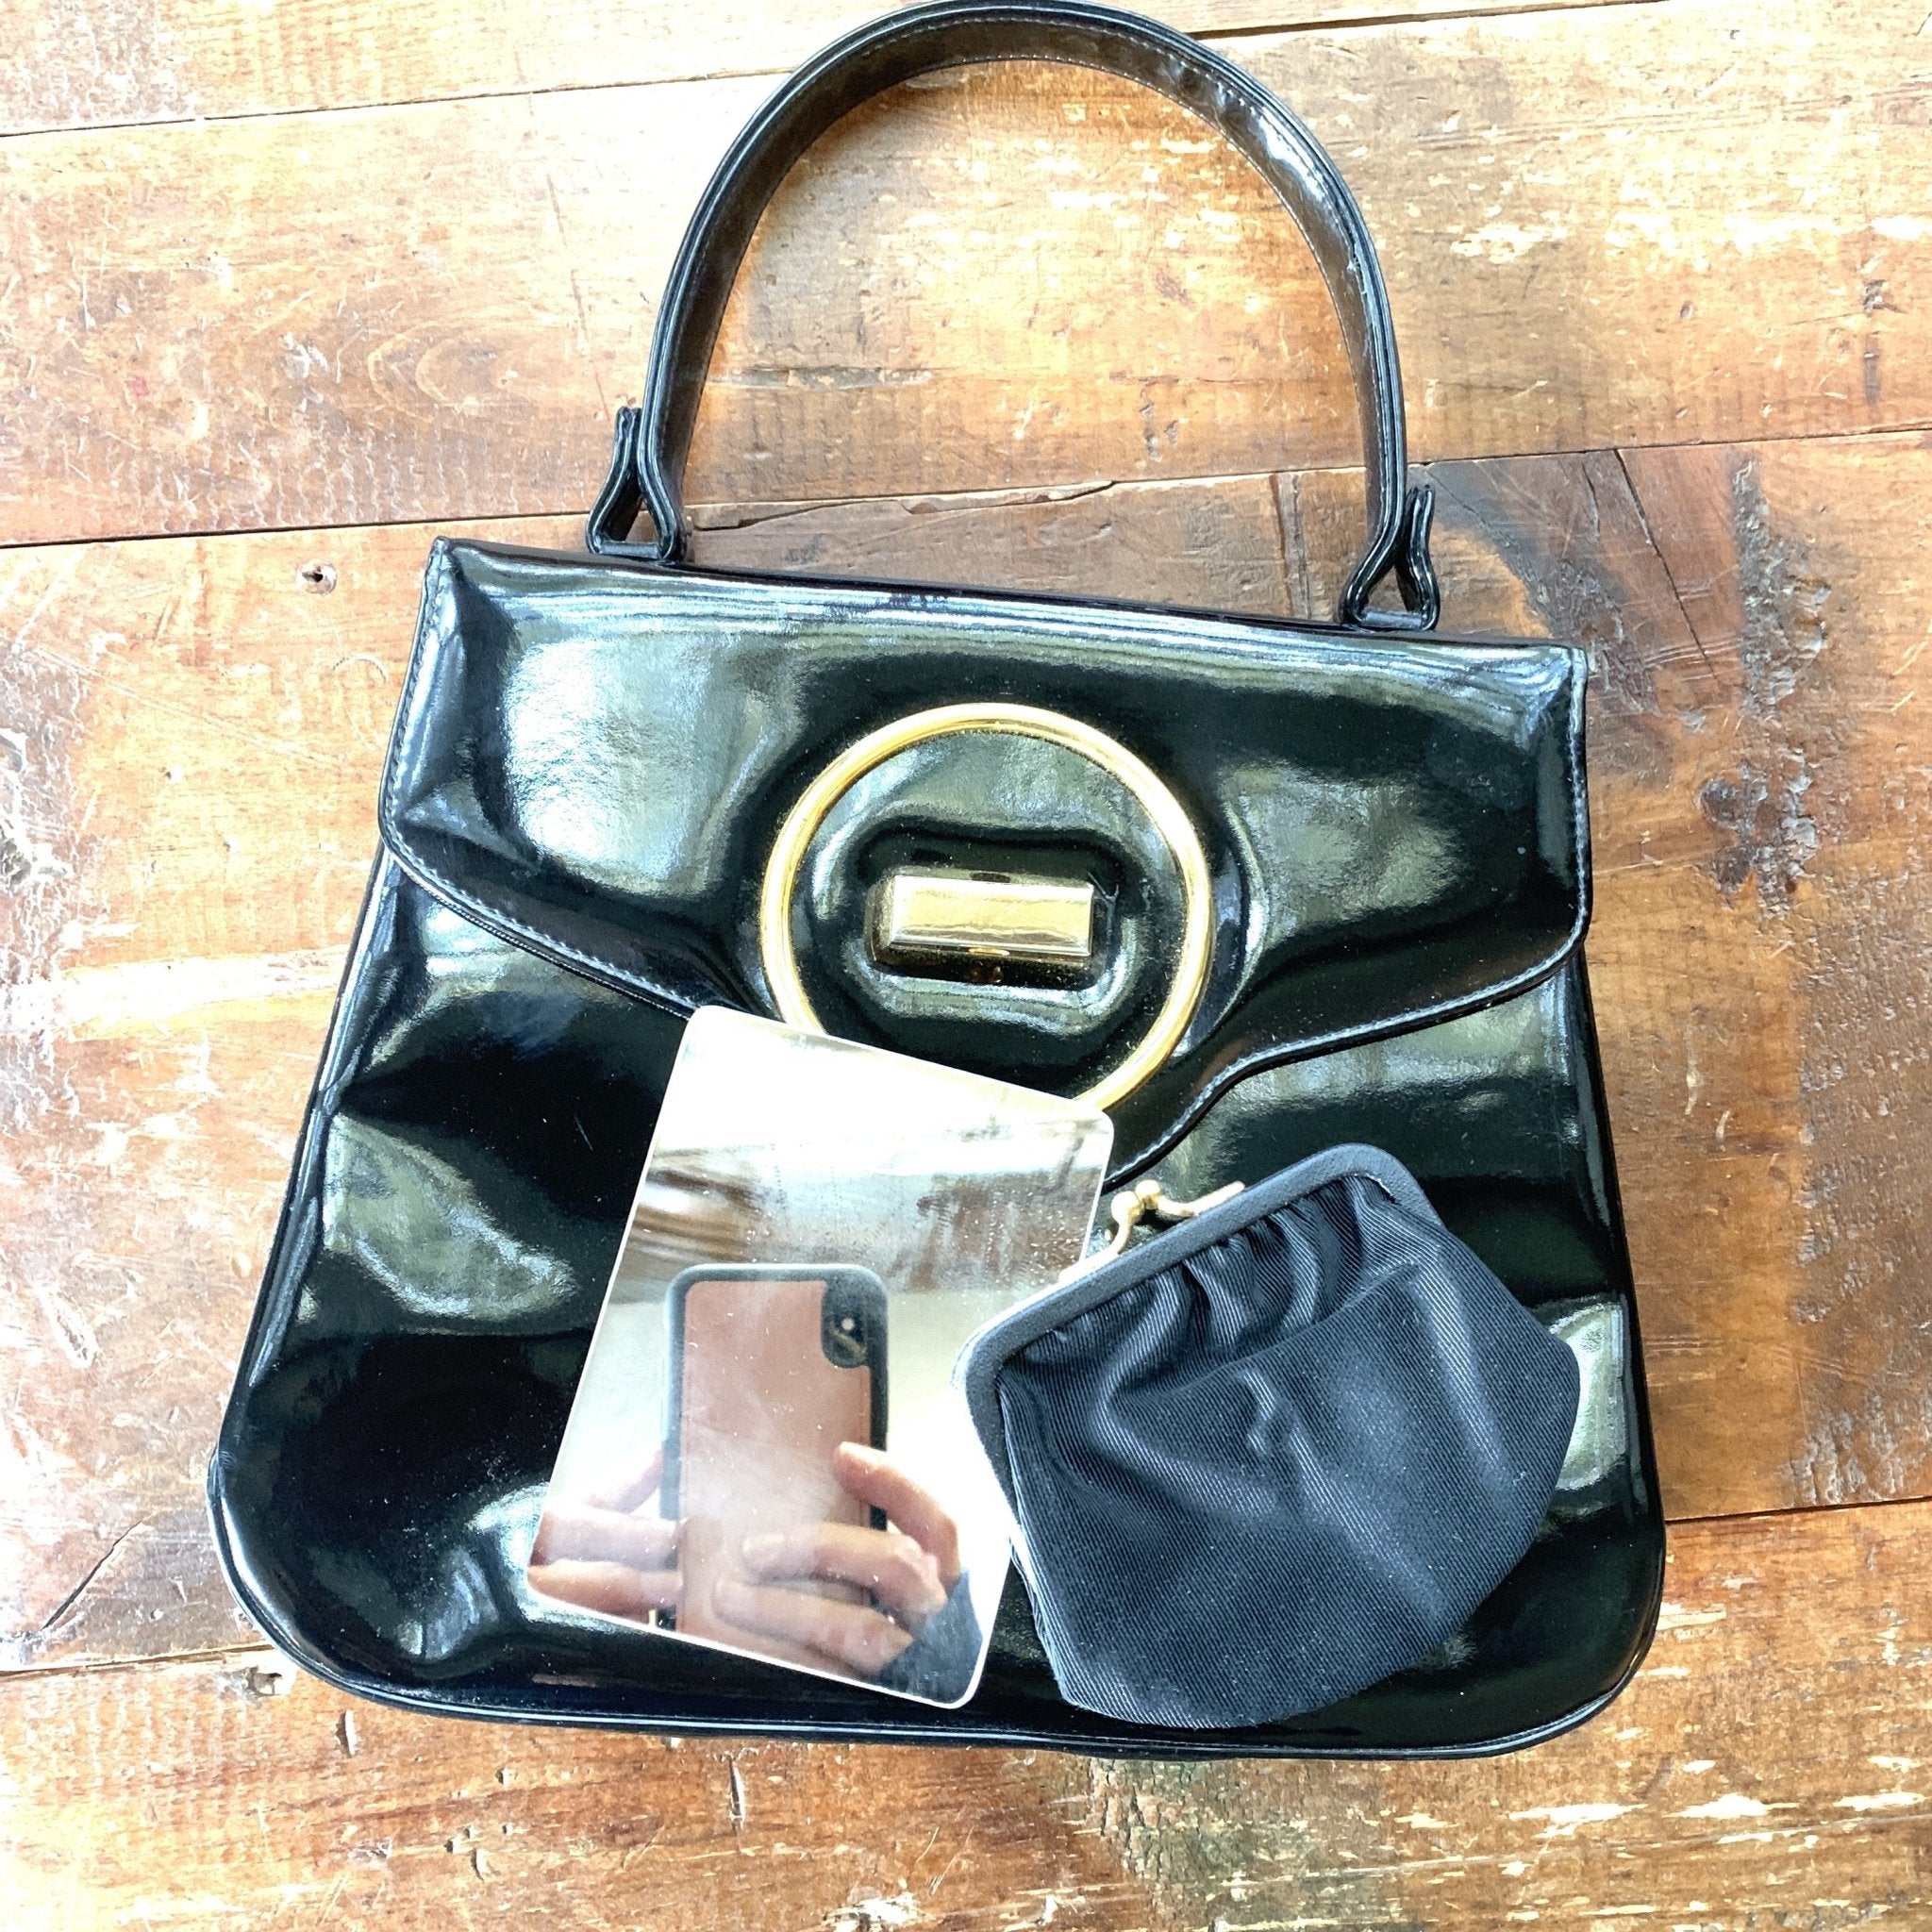 1950's/60's vintage black patent leather handbag - shot against a